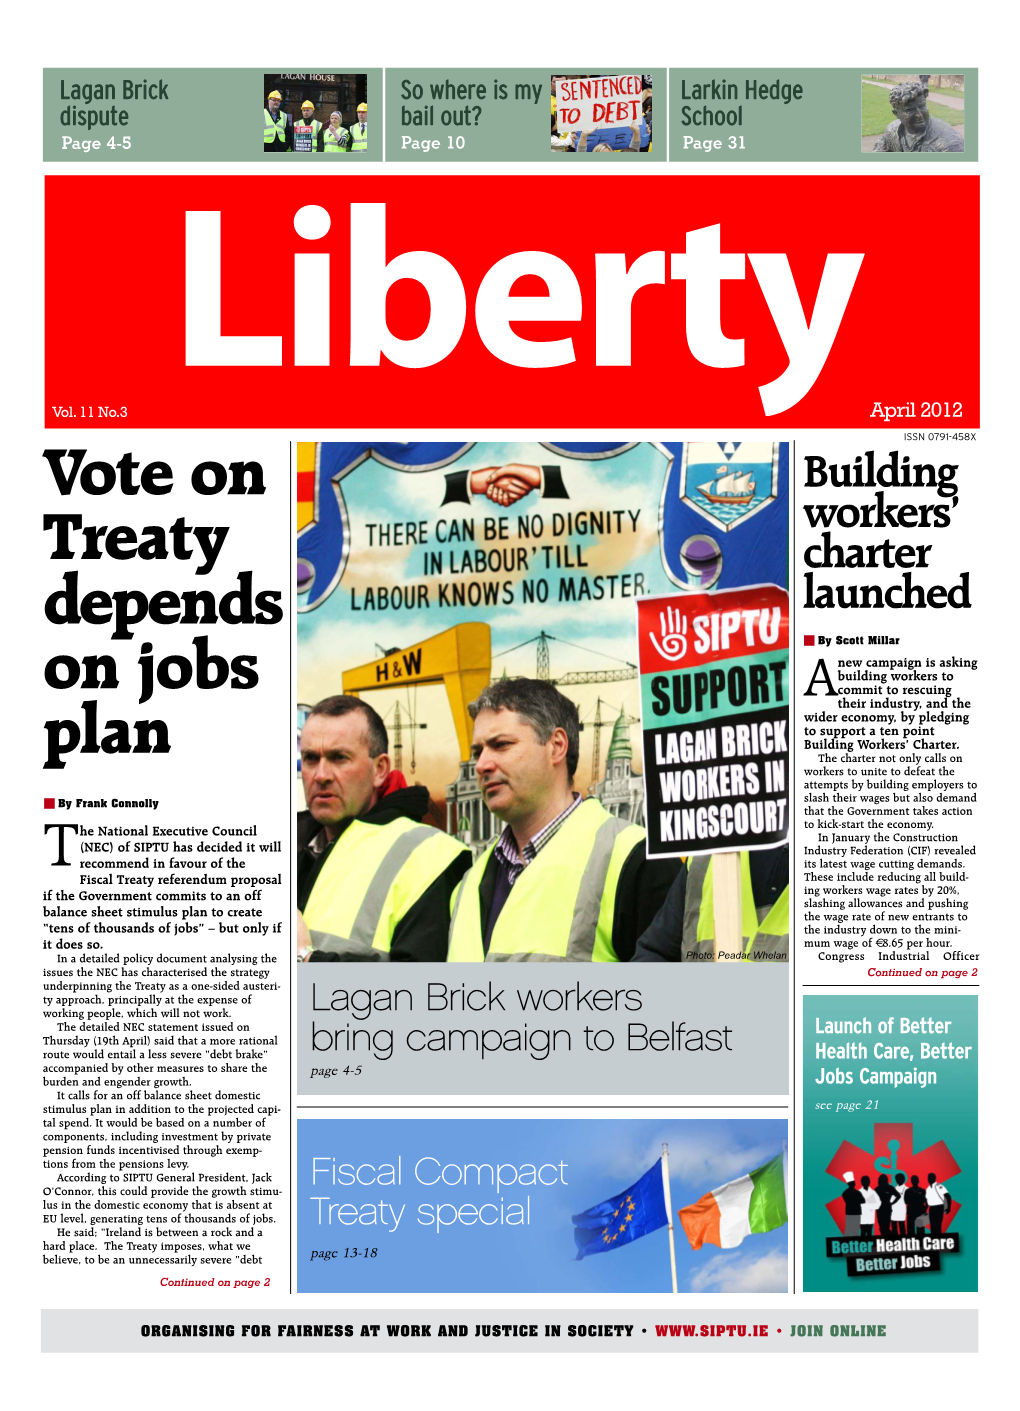 Vote on Treaty Depends on Jobs Plan Brake”